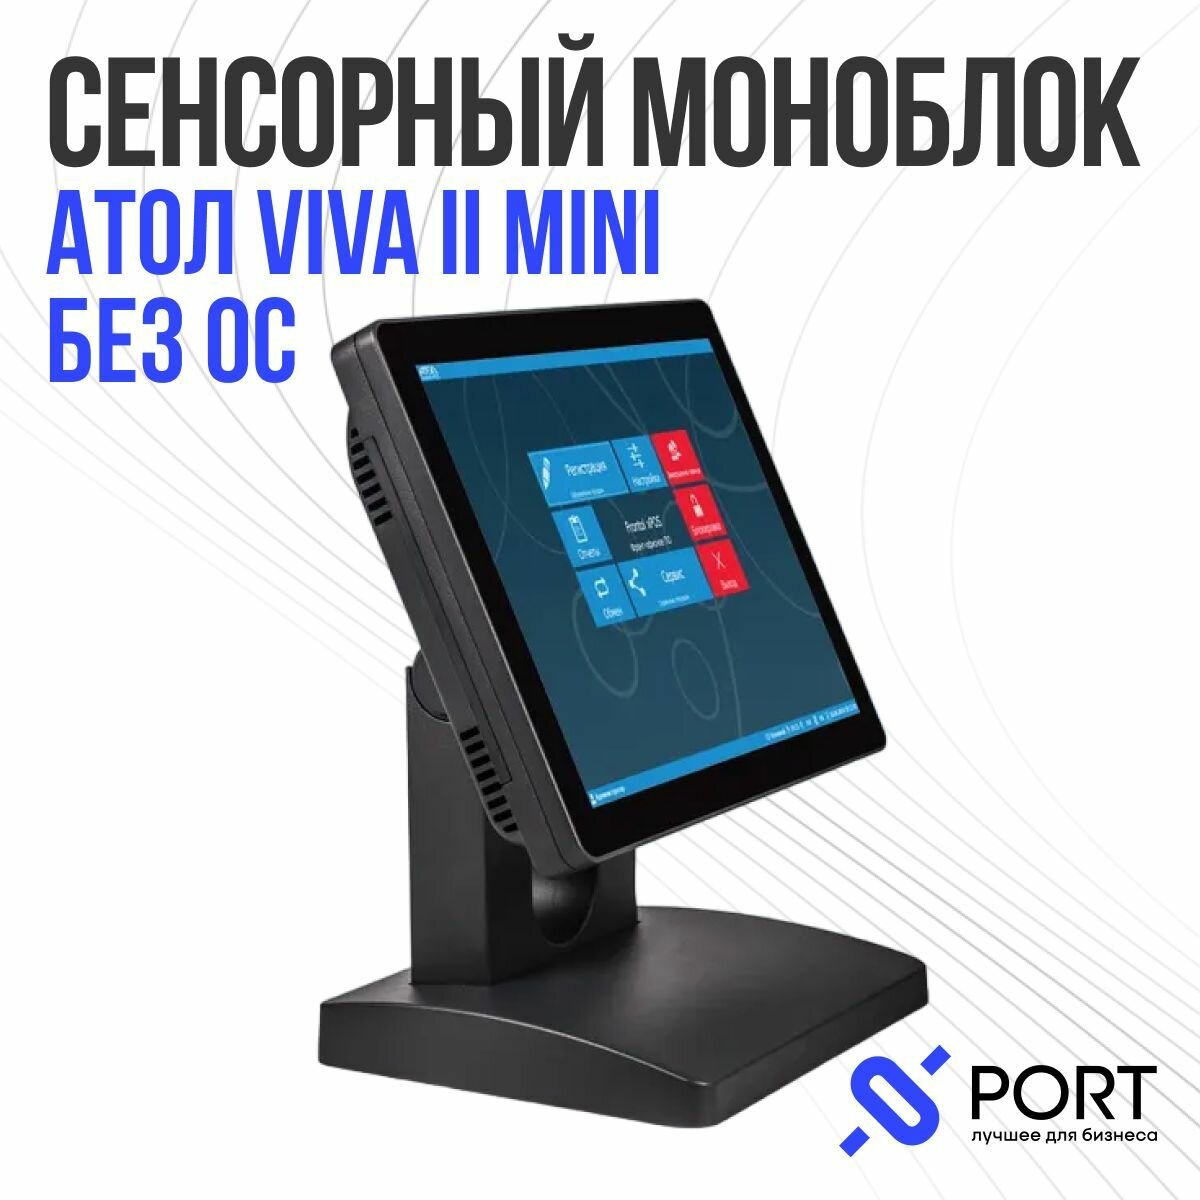 Сенсорный pos моноблок АТОЛ ViVA II Mini, 12" TFT, SSD 128gb, RAM 2 gb, MSR, Windows POSReady 7